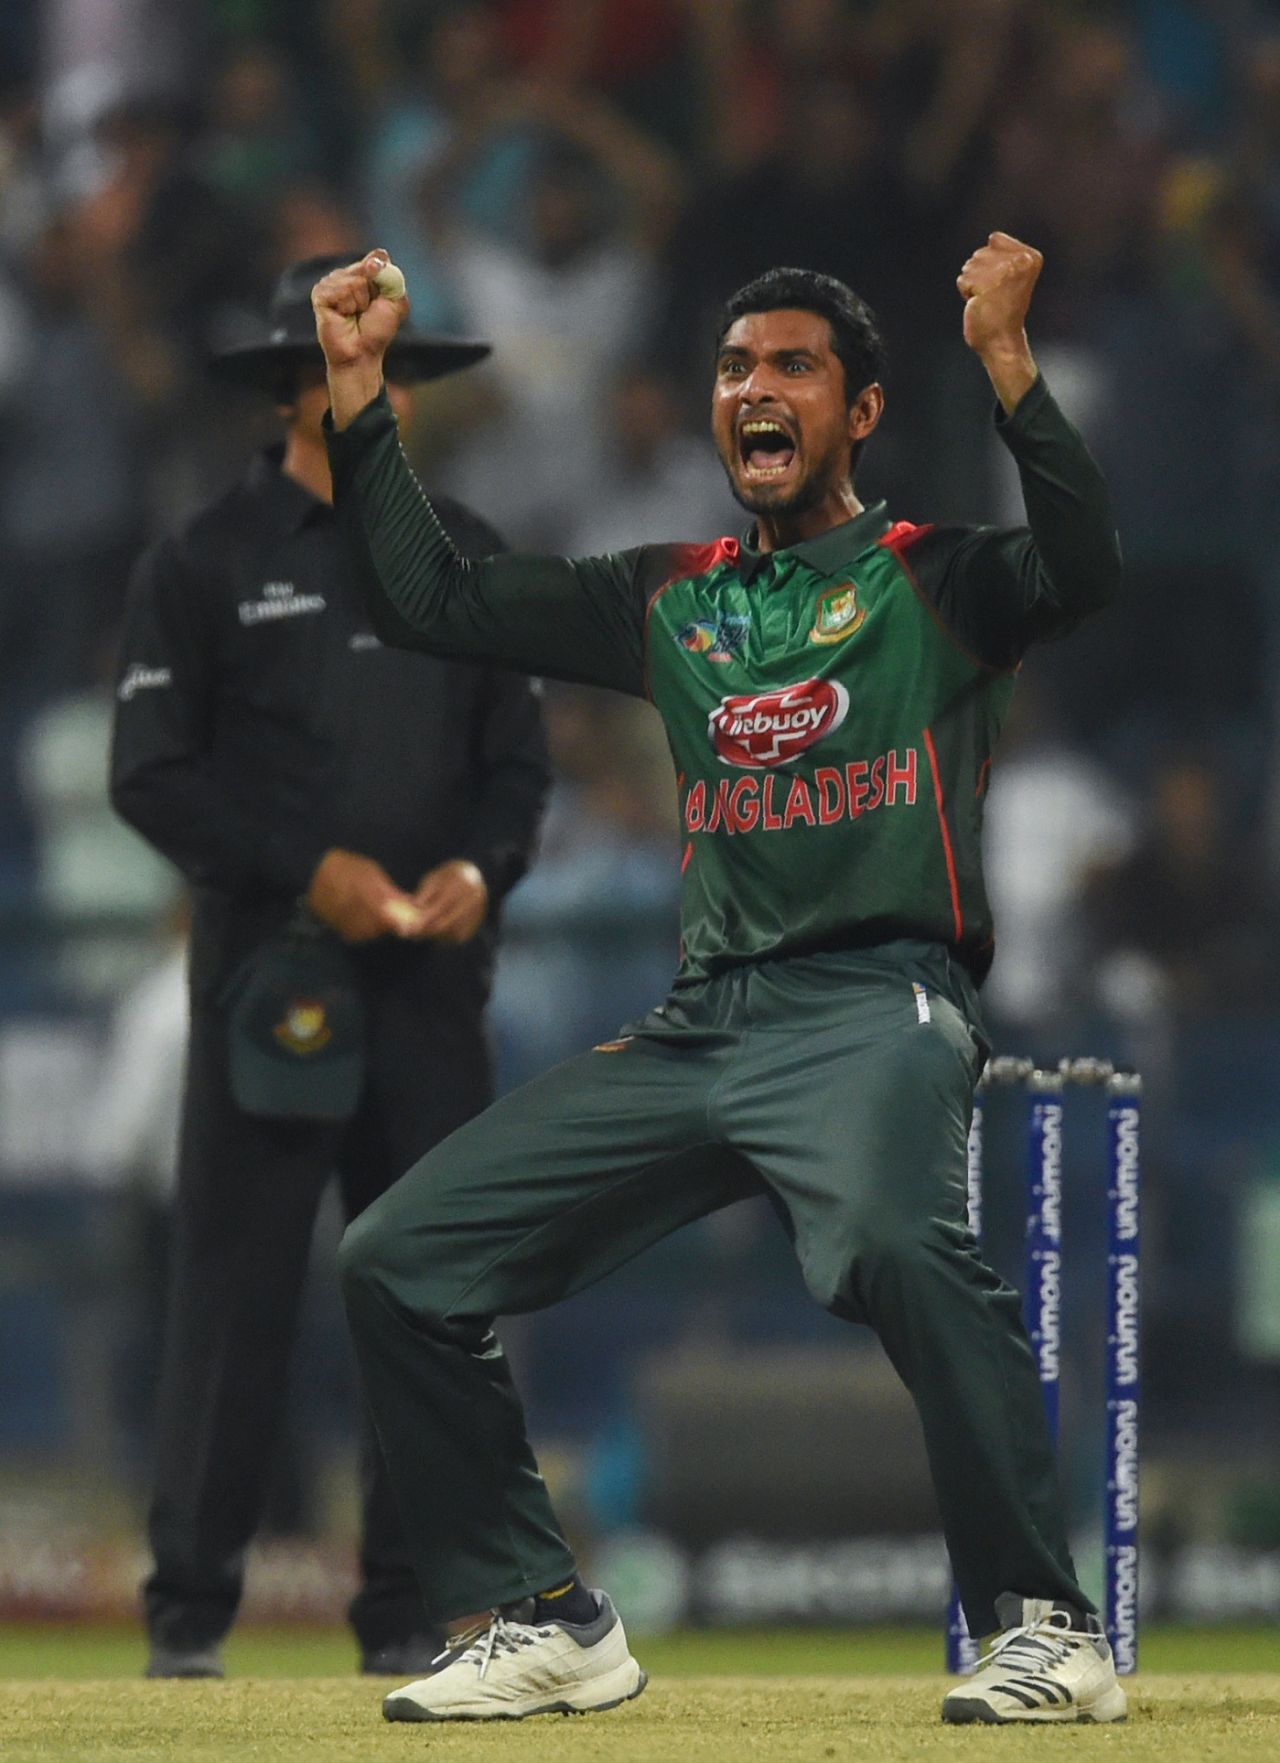 Mahmudullah roars after taking a wicket, Bangladesh v Pakistan, Asia Cup 2018, Abu Dhabi, September 26, 2018